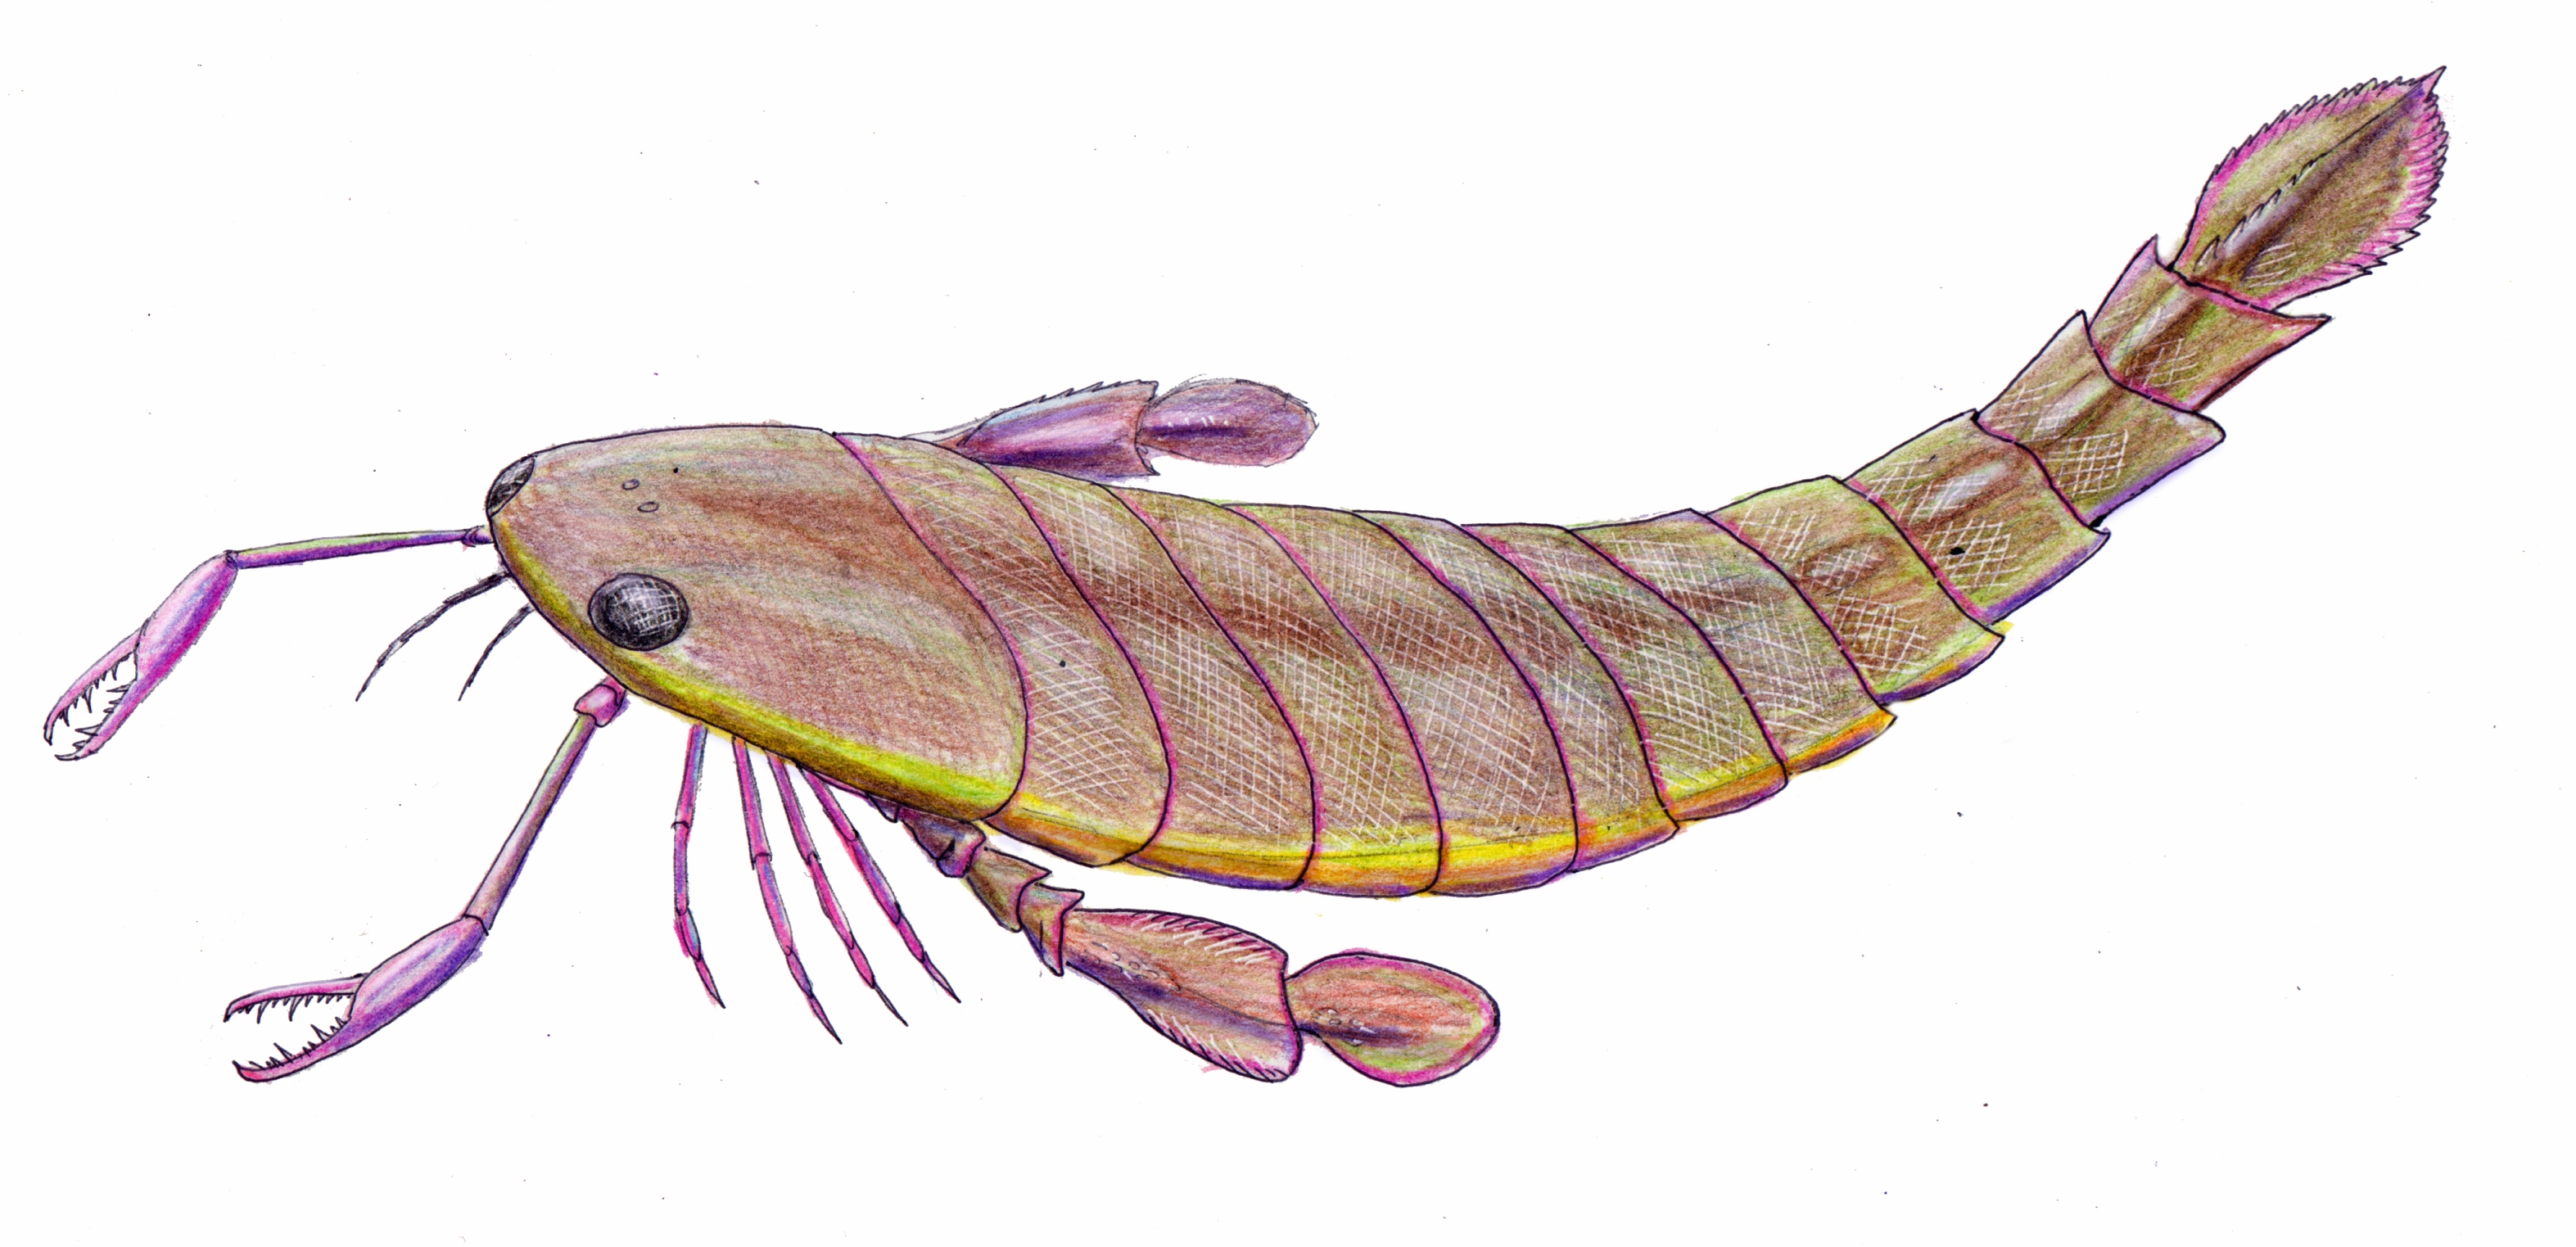 Pterygotus anglicus reconstruction